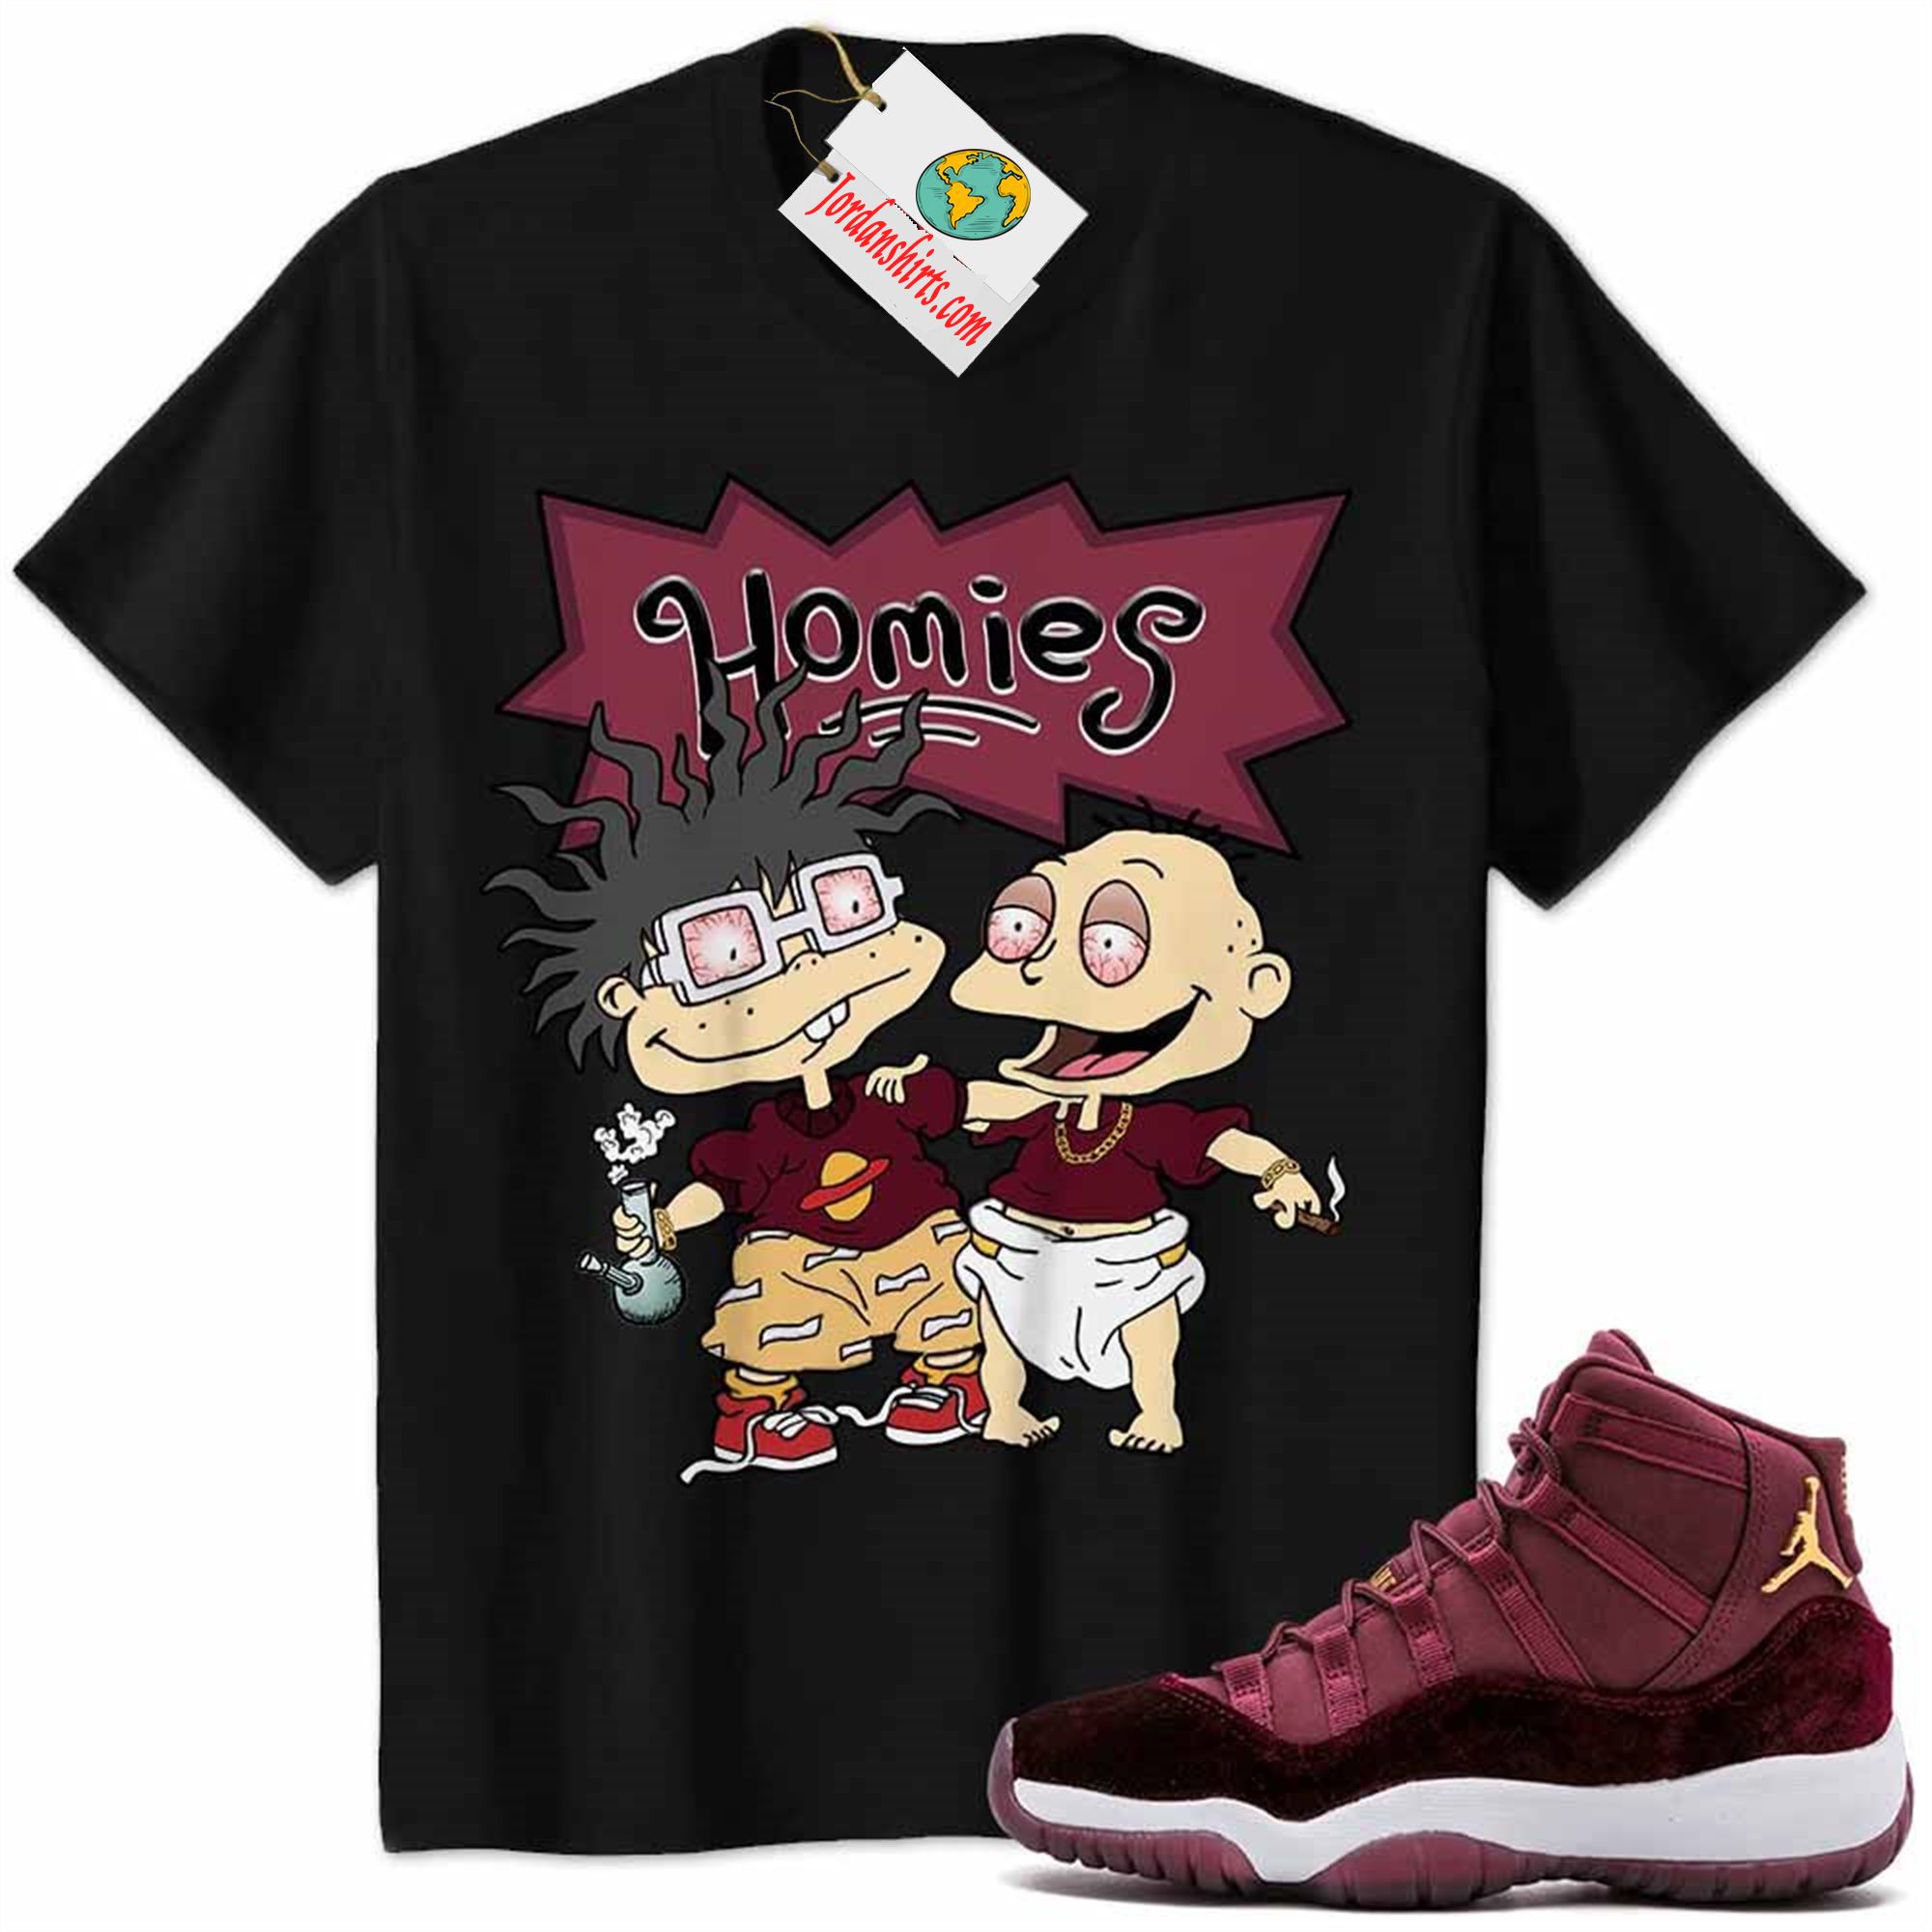 Jordan 11 Shirt, Jordan 11 Velvet Shirt Hommies Tommy Pickles Chuckie Finster Rugrats Black Full Size Up To 5xl